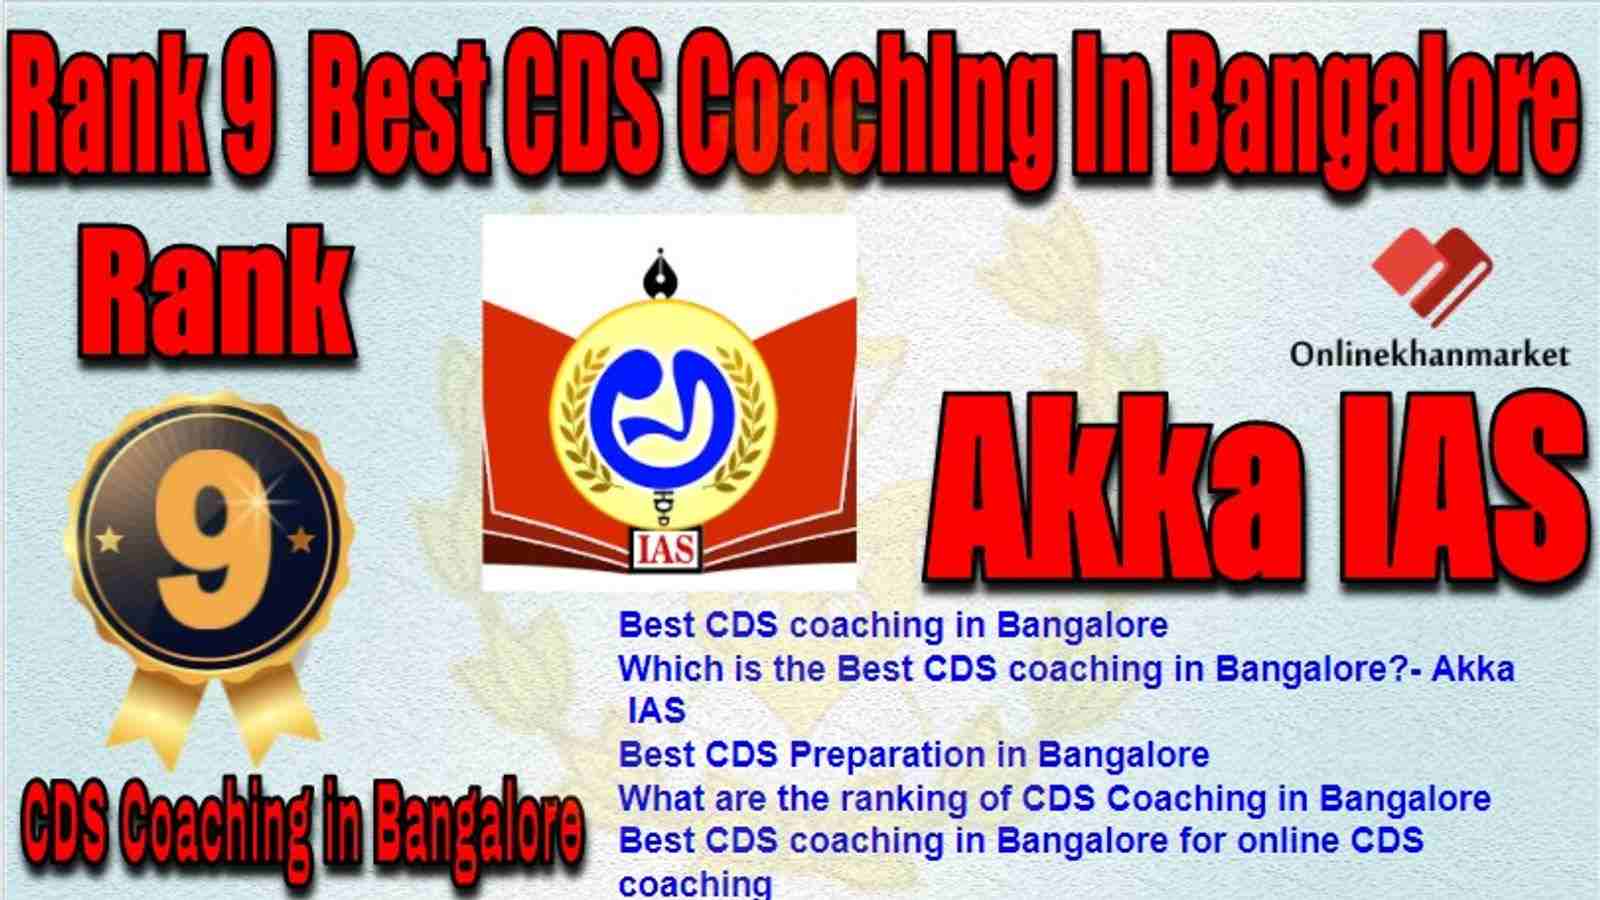 Rank 9 Best CDS Coaching in bangalore